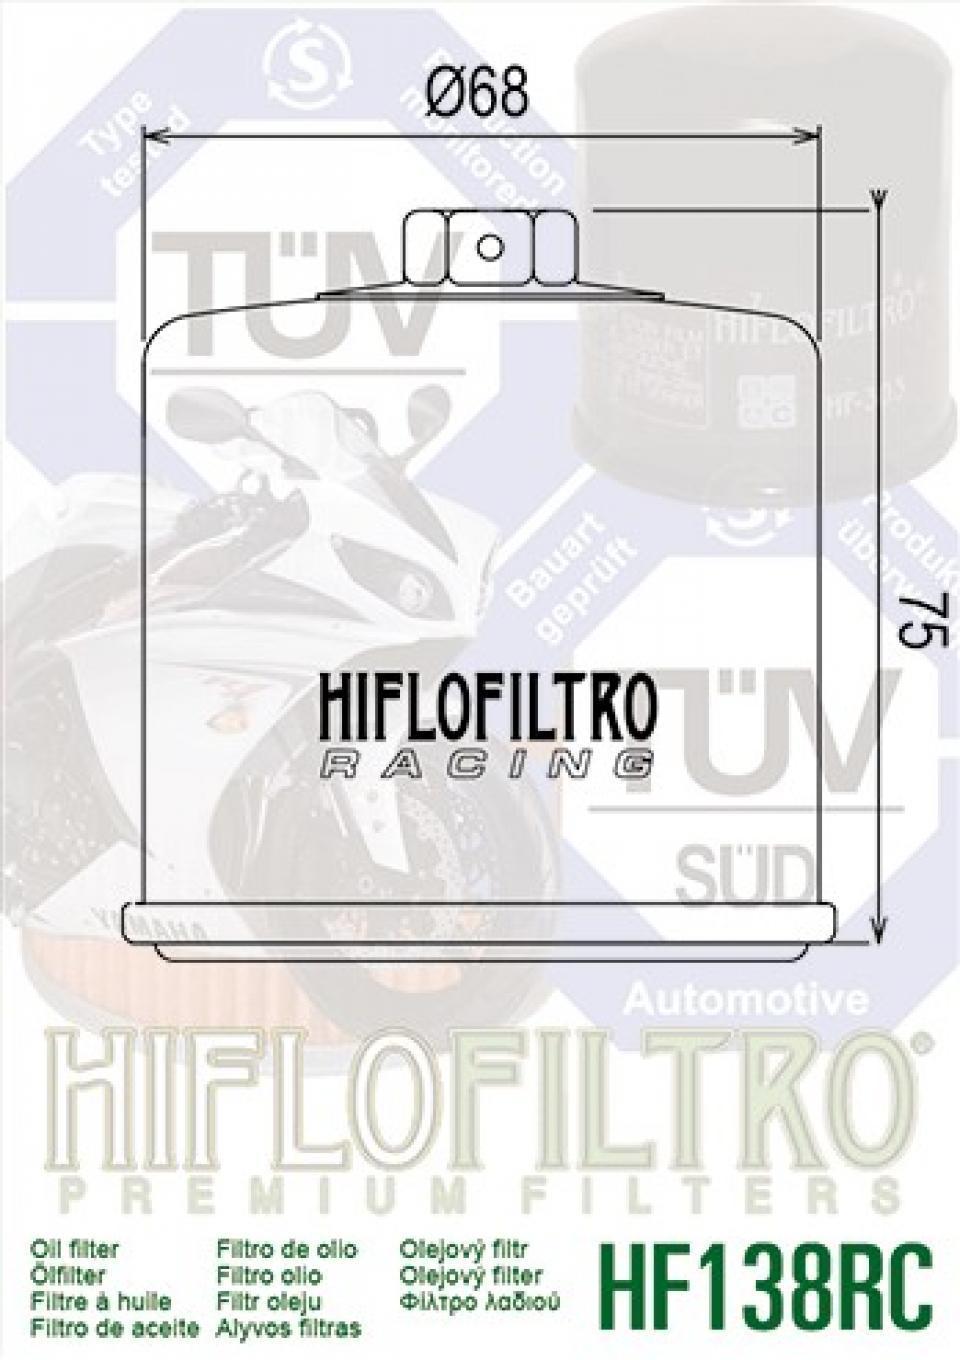 Filtre à huile Hiflofiltro pour Moto Suzuki 650 Gsx F 2008 à 2015 HF138RC Neuf